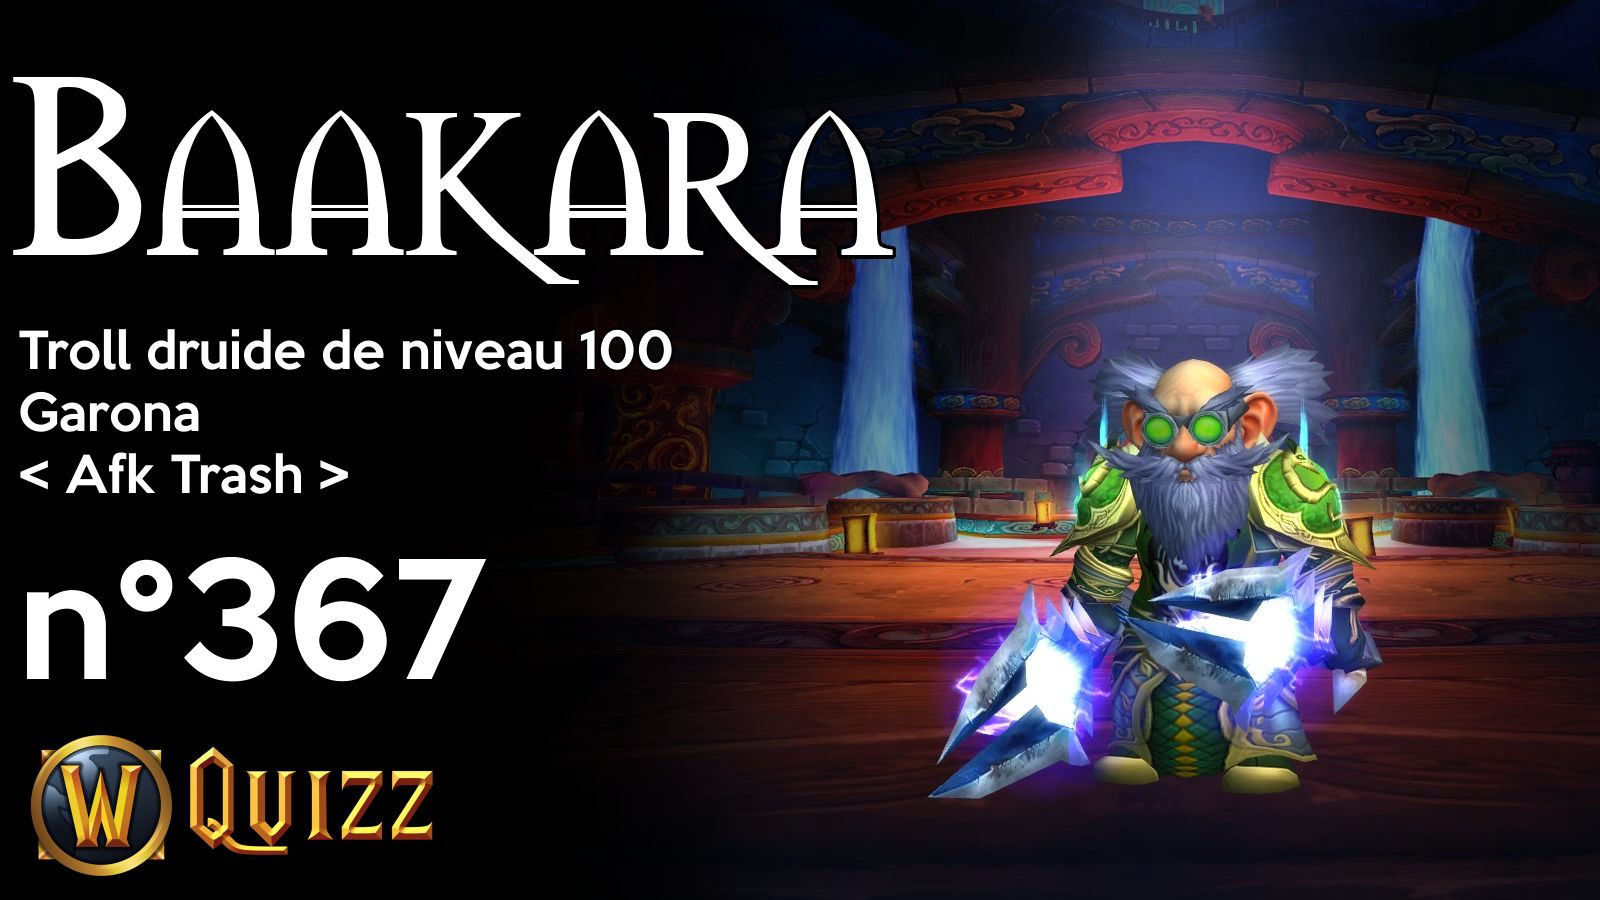 Baakara, Troll druide de niveau 100, Garona